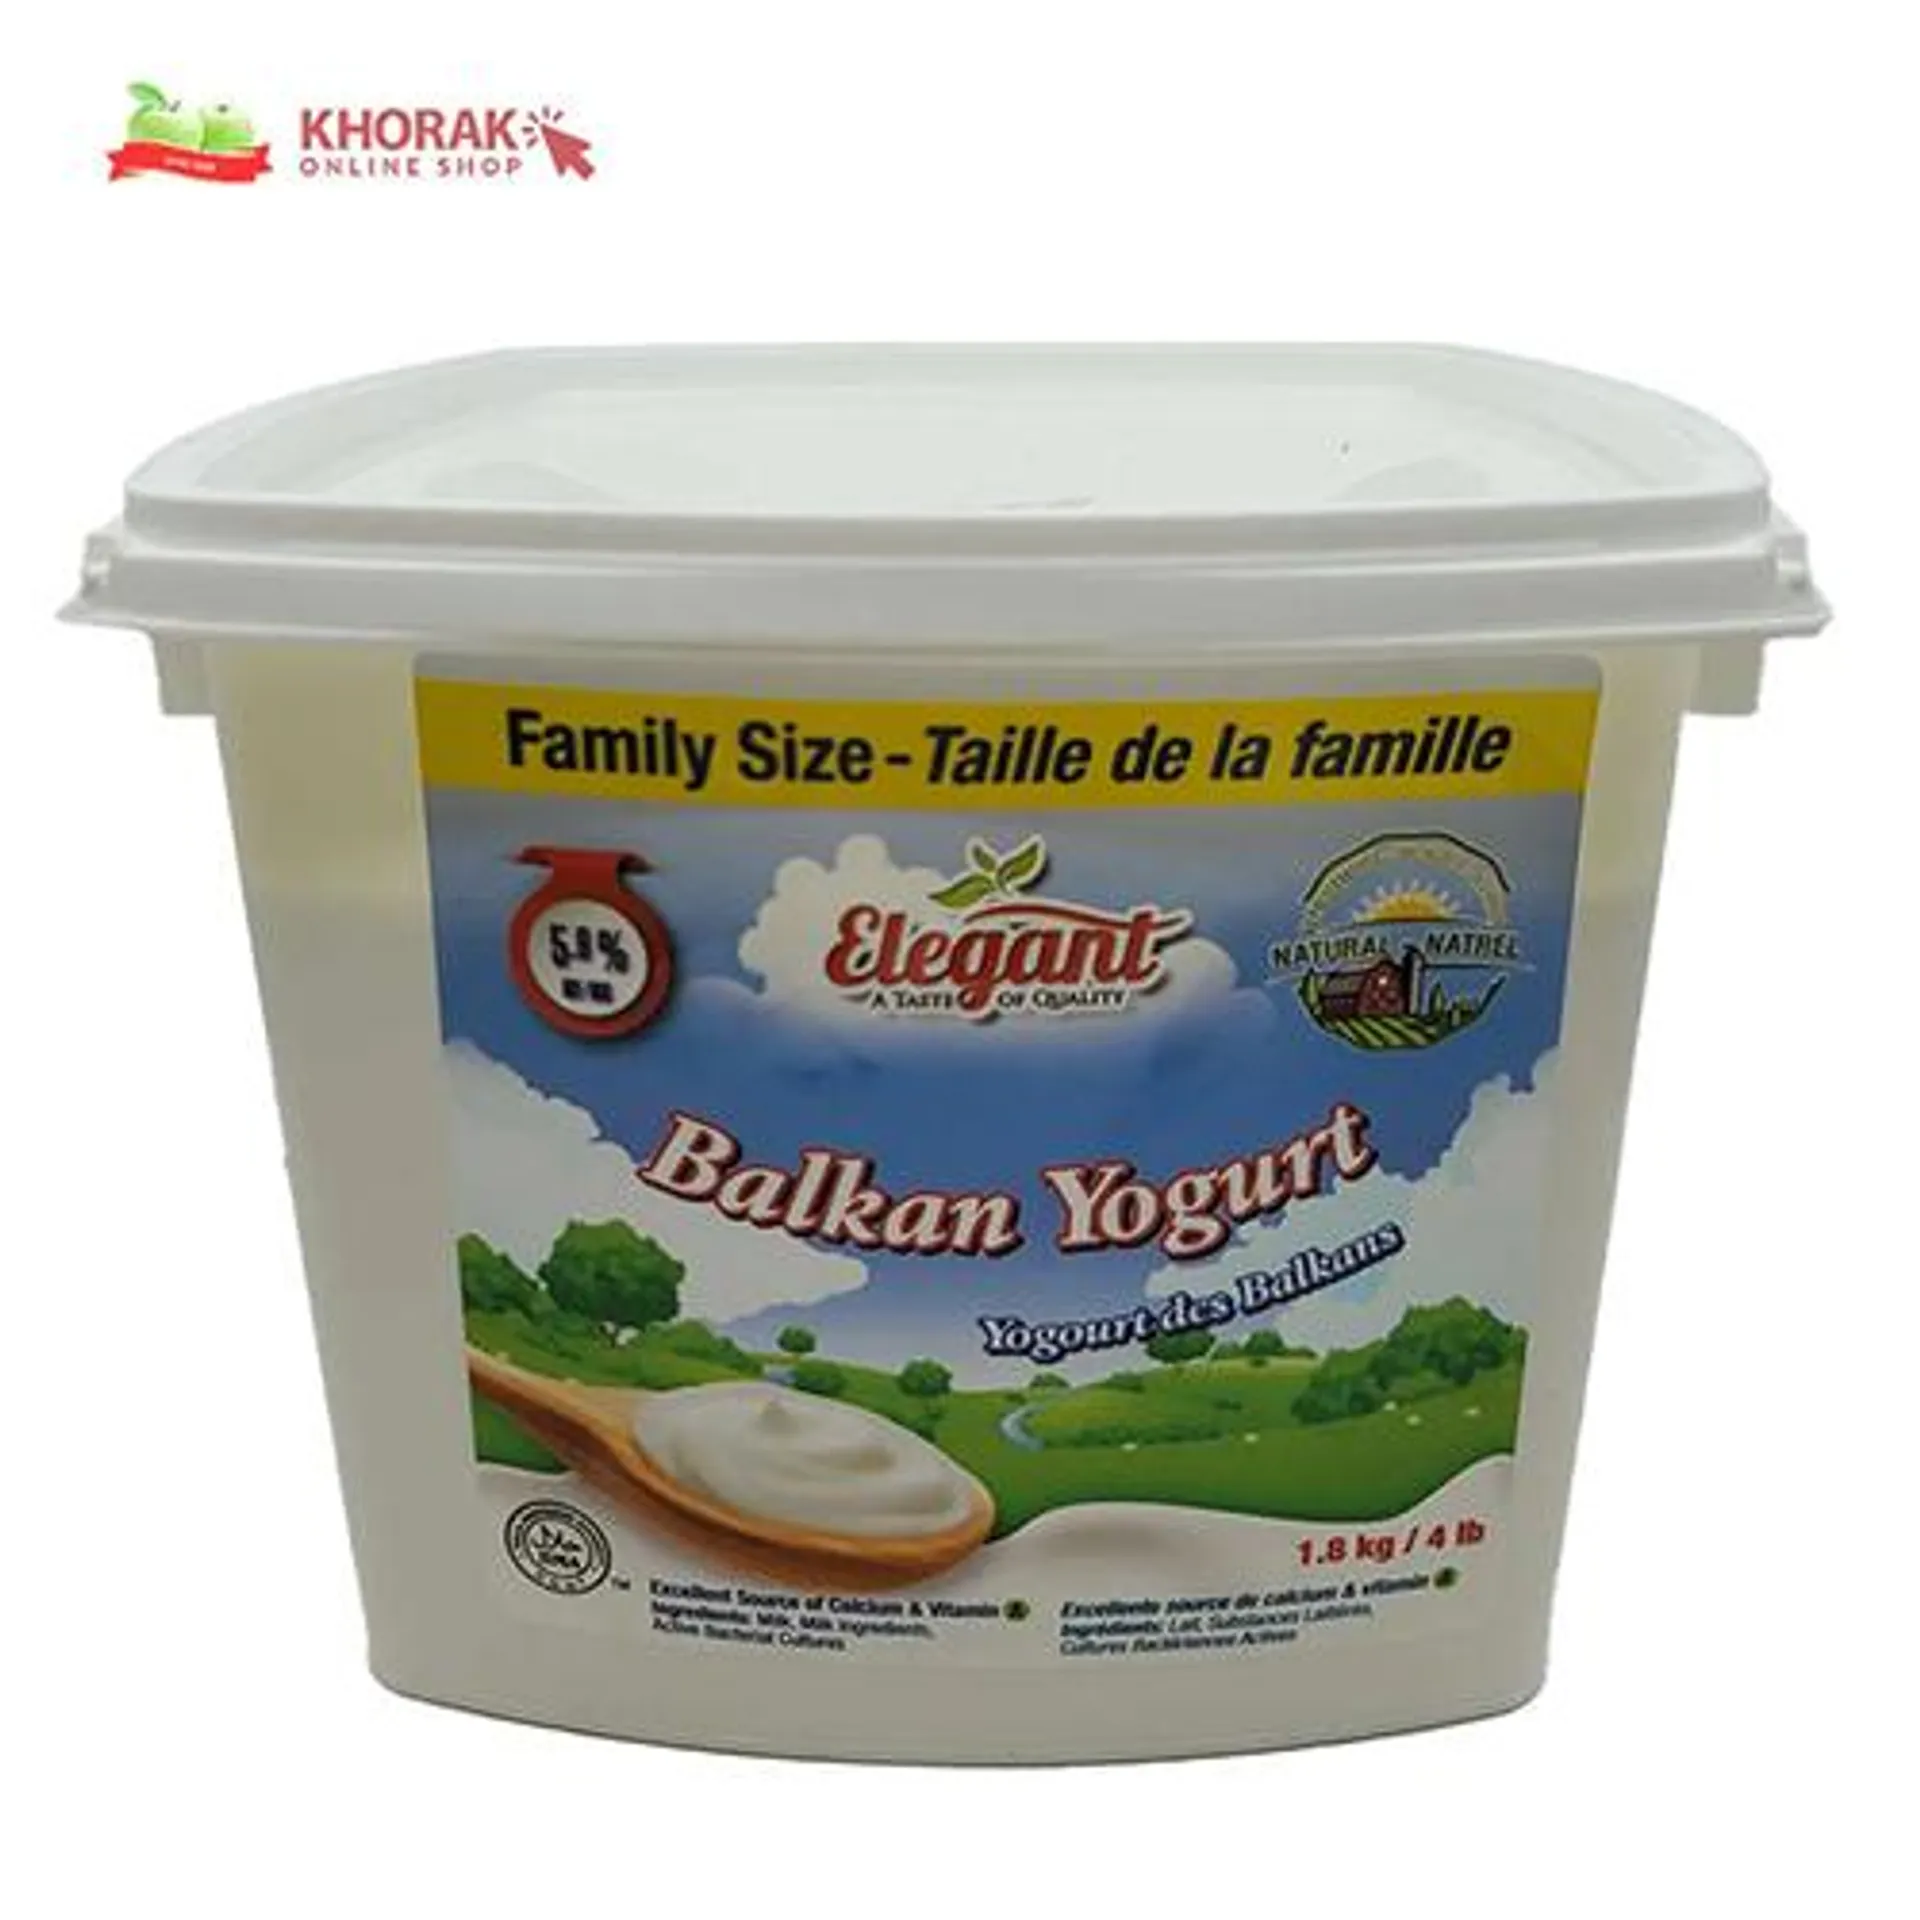 Elegant Balkan Yogurt 5.9% 4lb